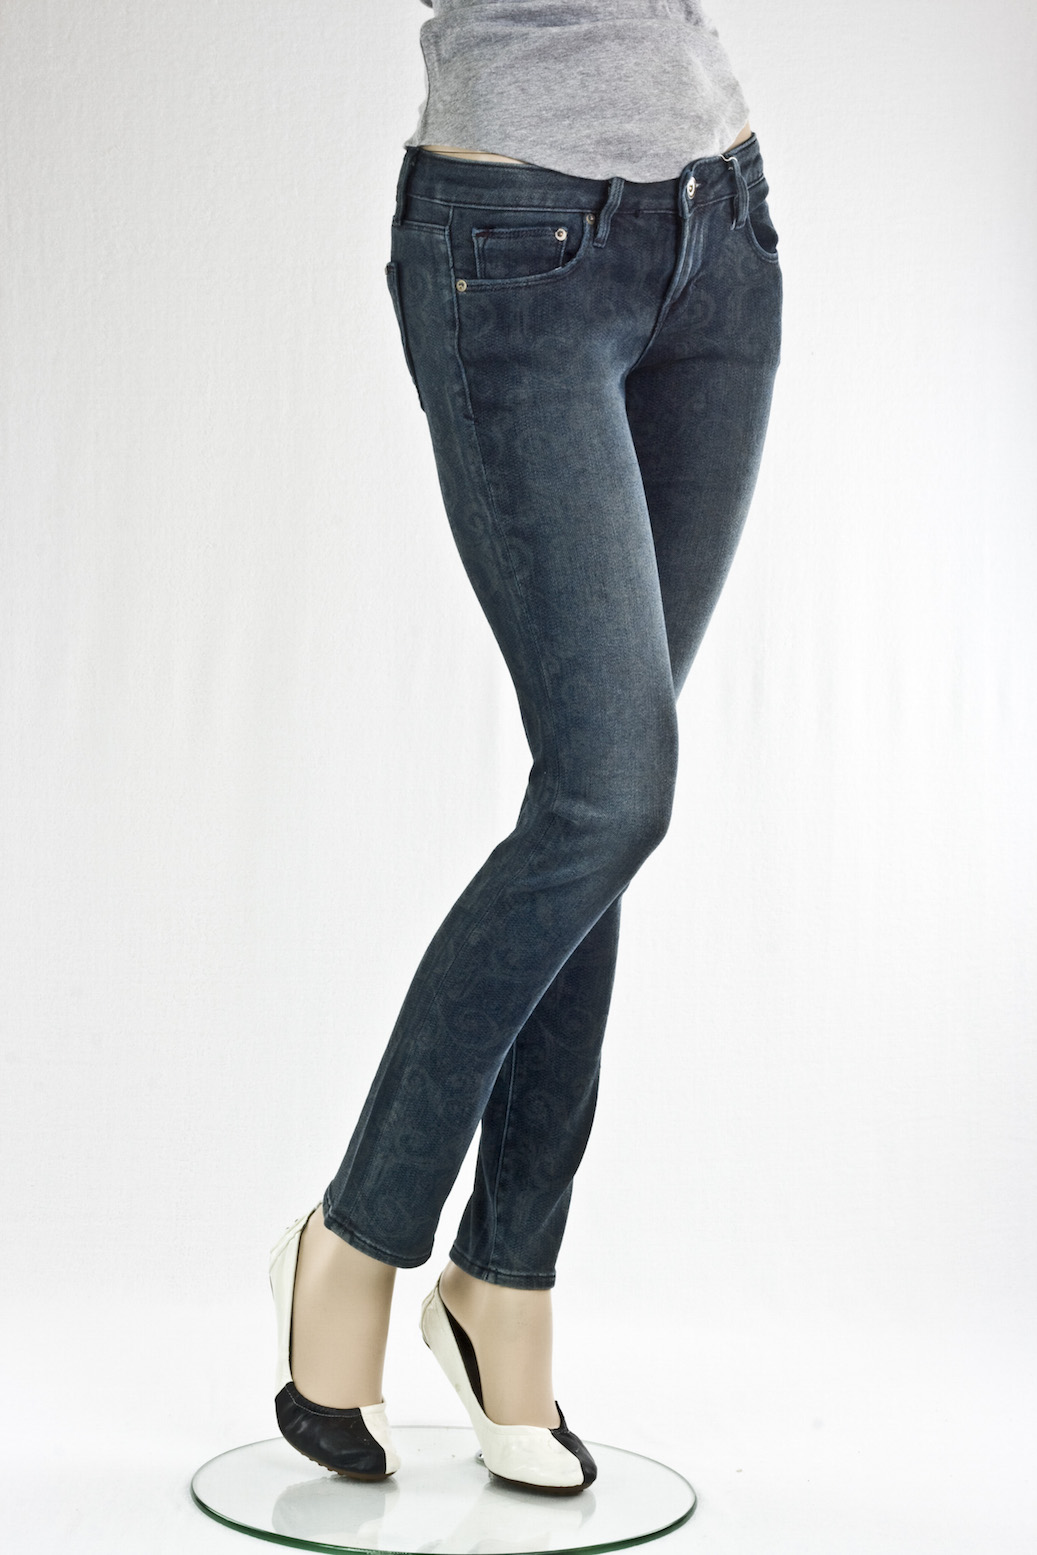 джинсы женские Cult of individuality "Скини" Treaser skinny jeans